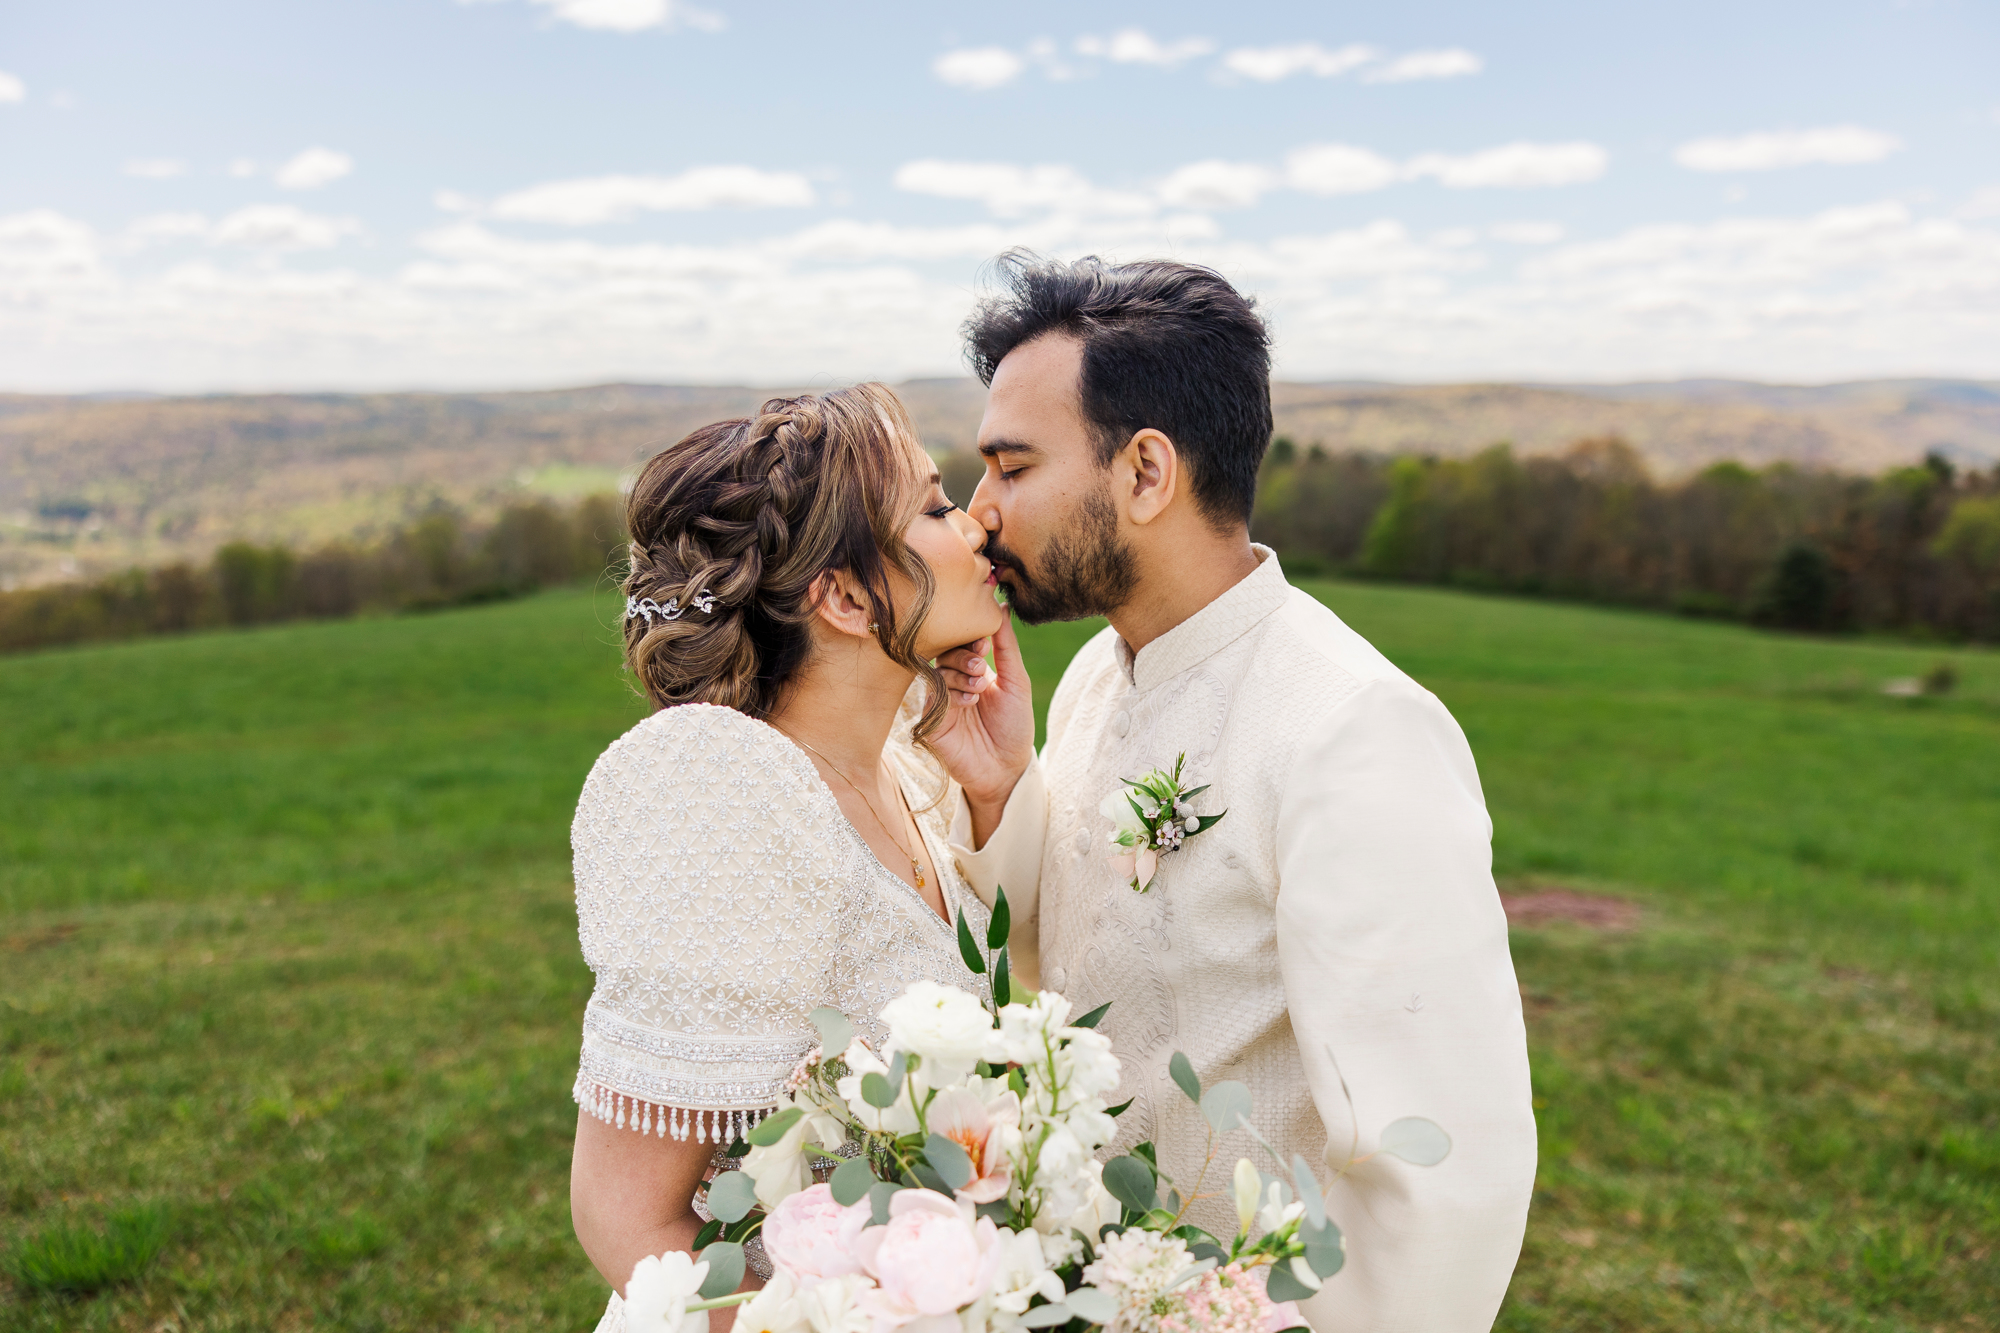 Stunning Hudson Valley wedding videography